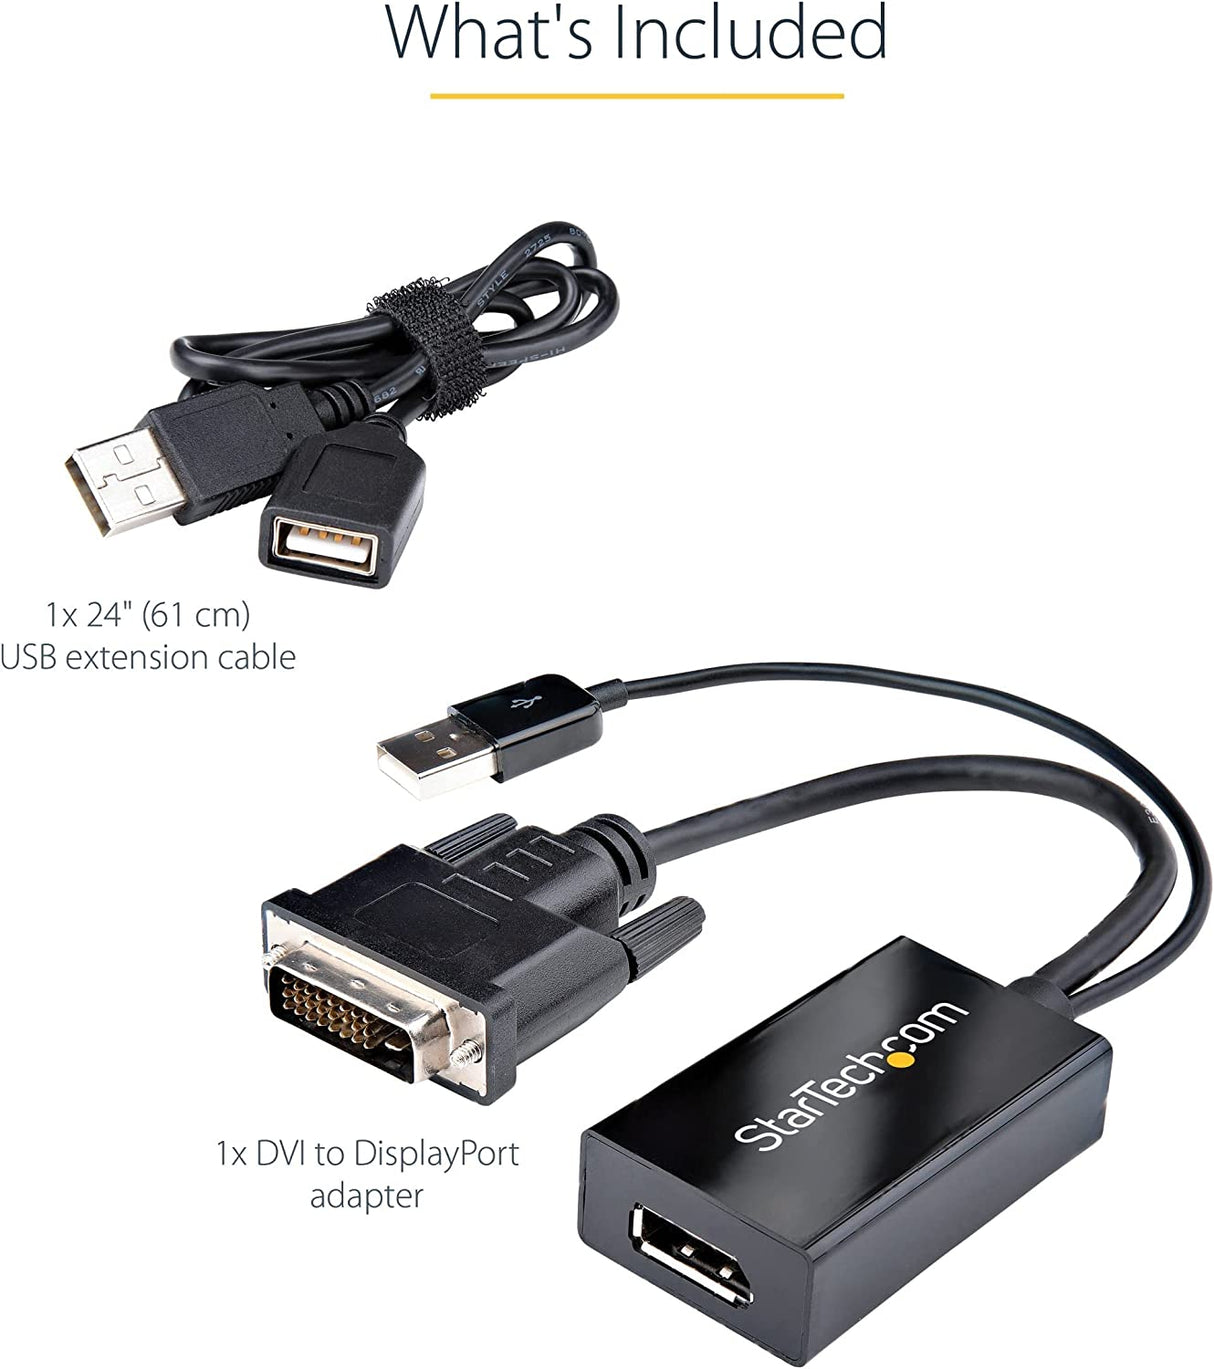 StarTech.com DVI to DisplayPort Adapter - USB Power - 1920 x 1200 - DVI to DisplayPort Converter - Video Adapter - DVI-D to DP (DVI2DP2)